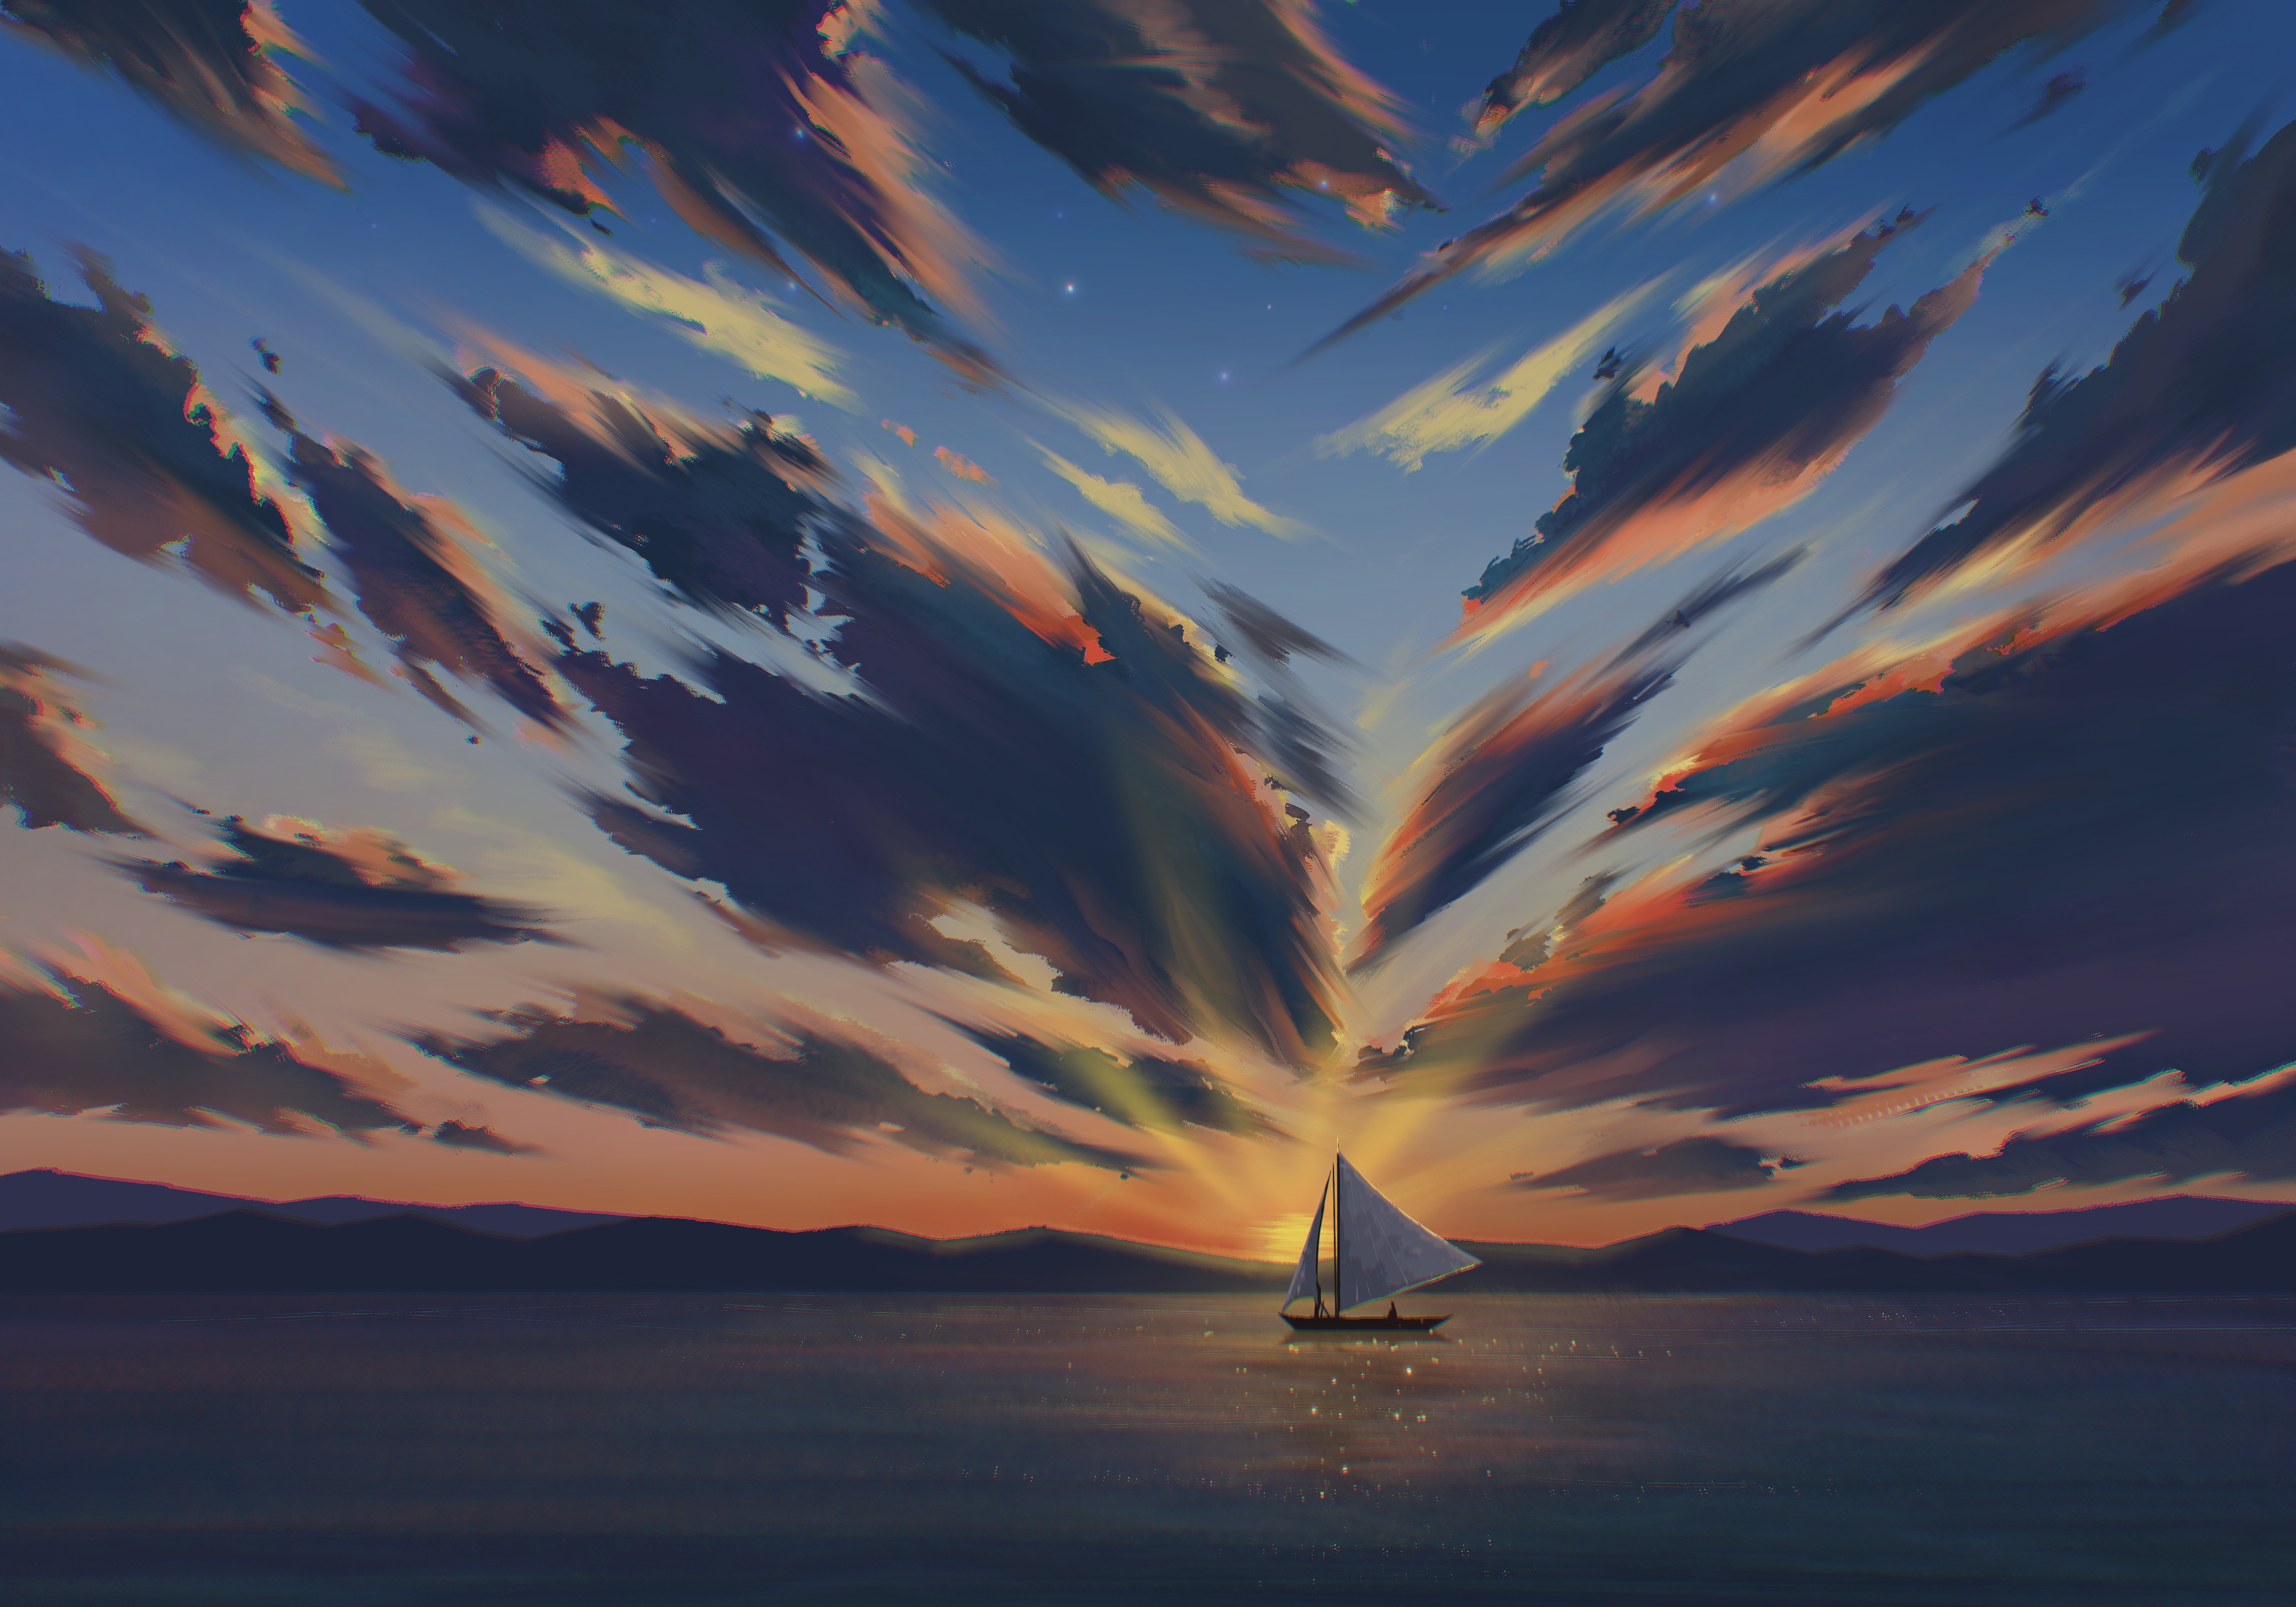 General 4724x3307 digital art artwork illustration painting landscape clouds sea water boat sailing ship sunset sky sailboats